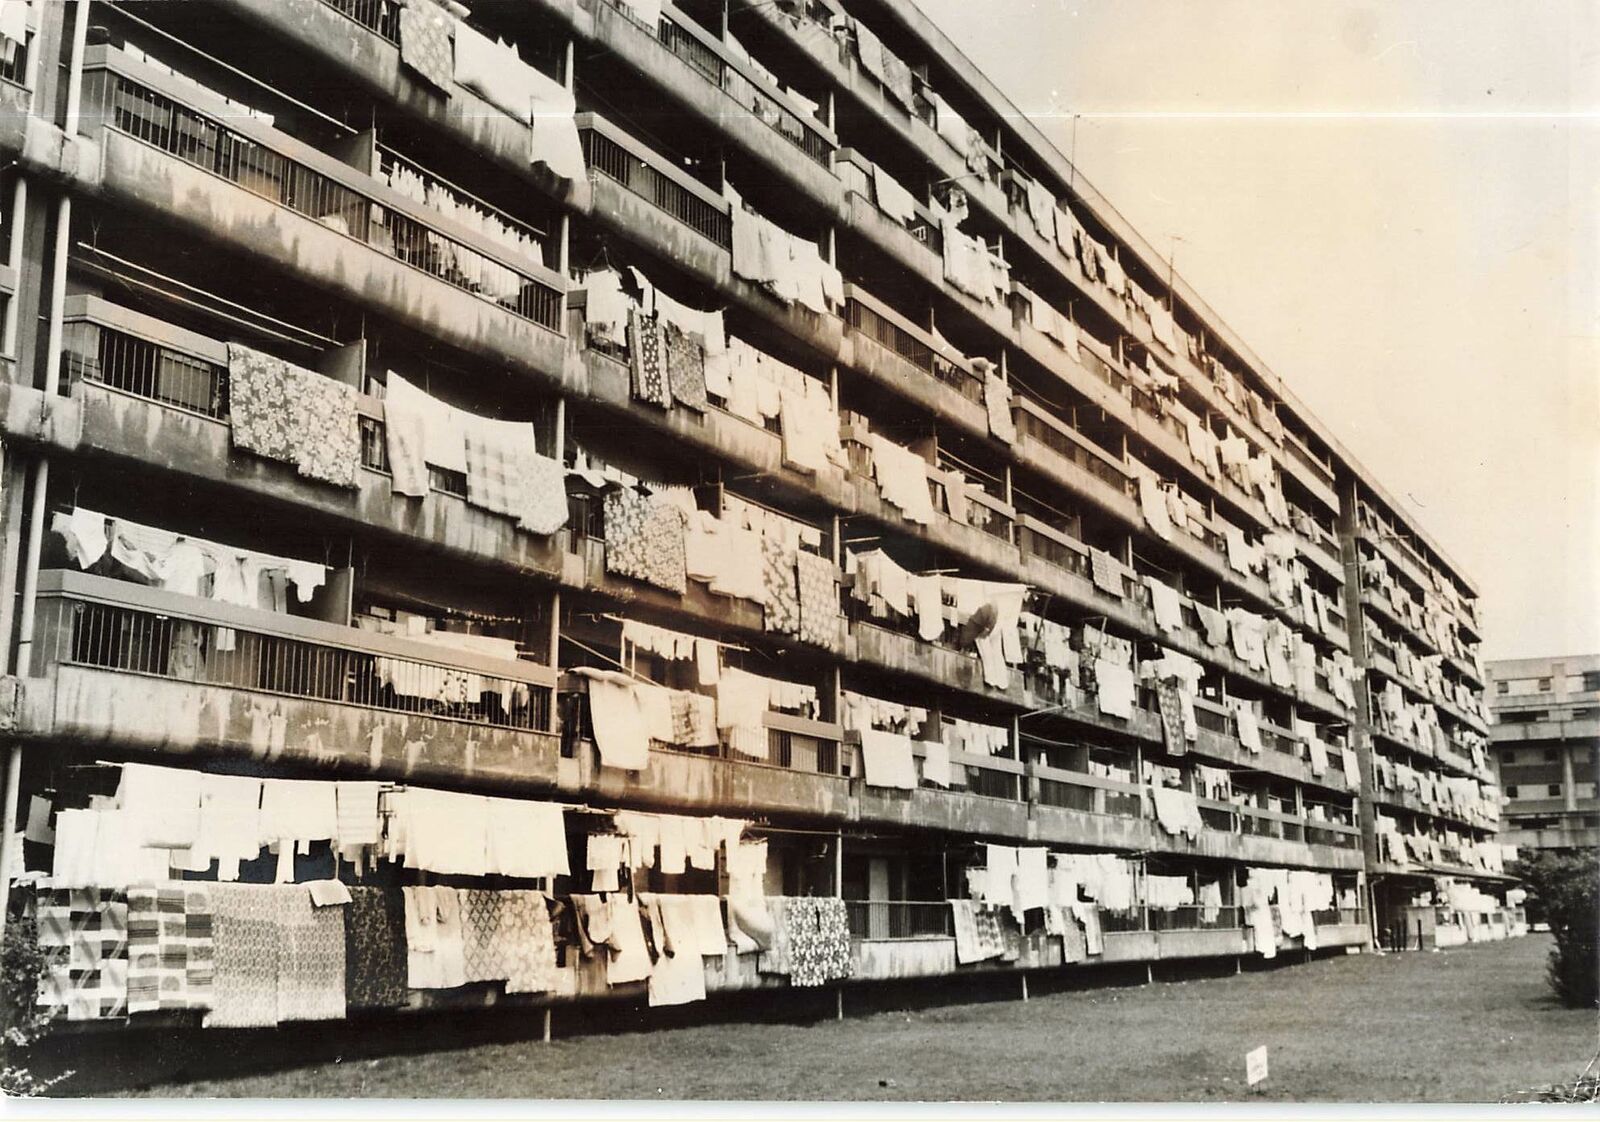 1970 Press Photo Akabane Tokyo Flats Air Drying Sheets Laundry on Balconies kg